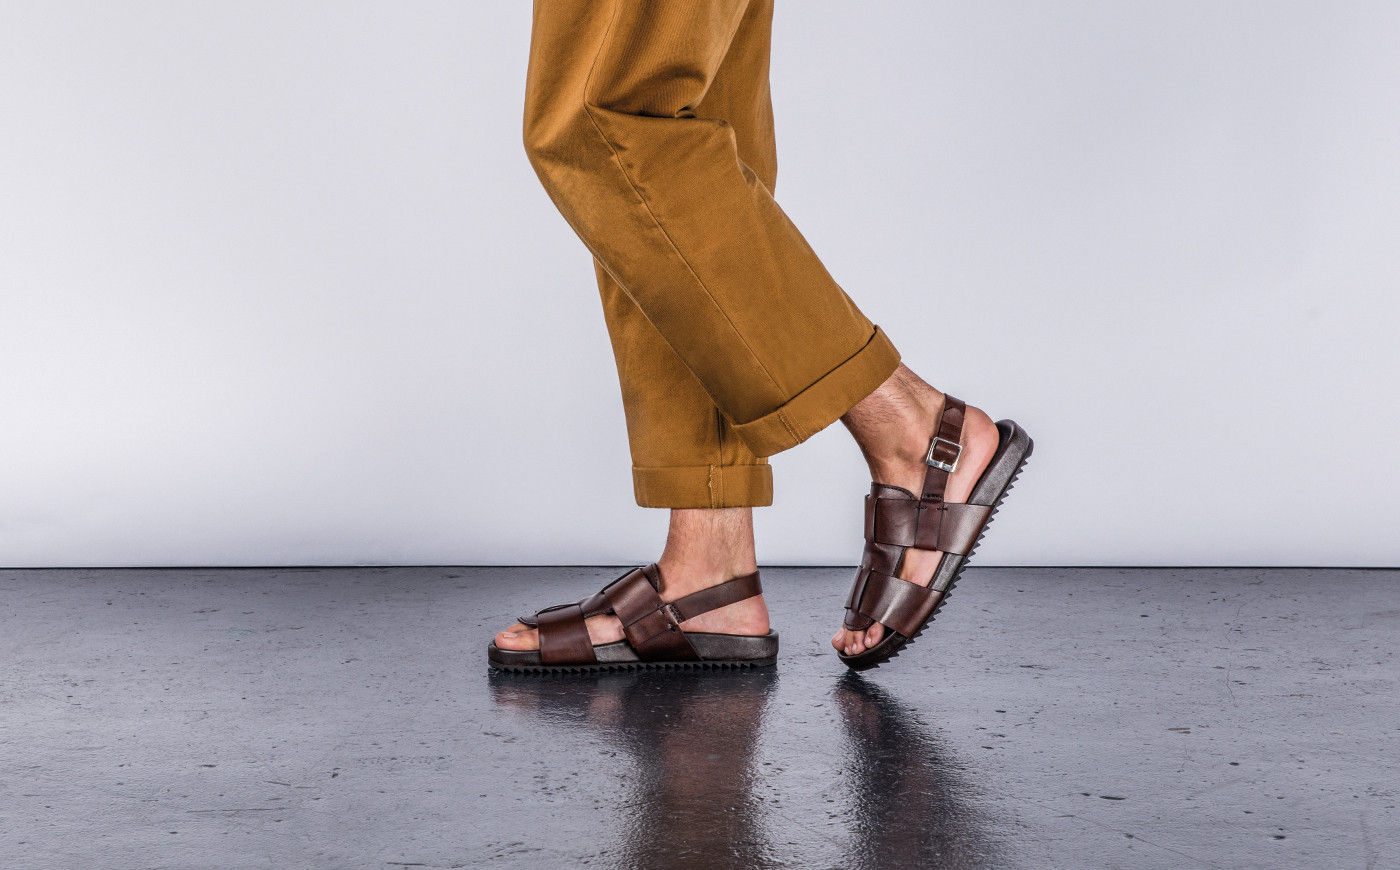 Buy Golden Fancy Heels Sandals For Women By ShoeConnection in Pakistan |  online shopping in Pakistan